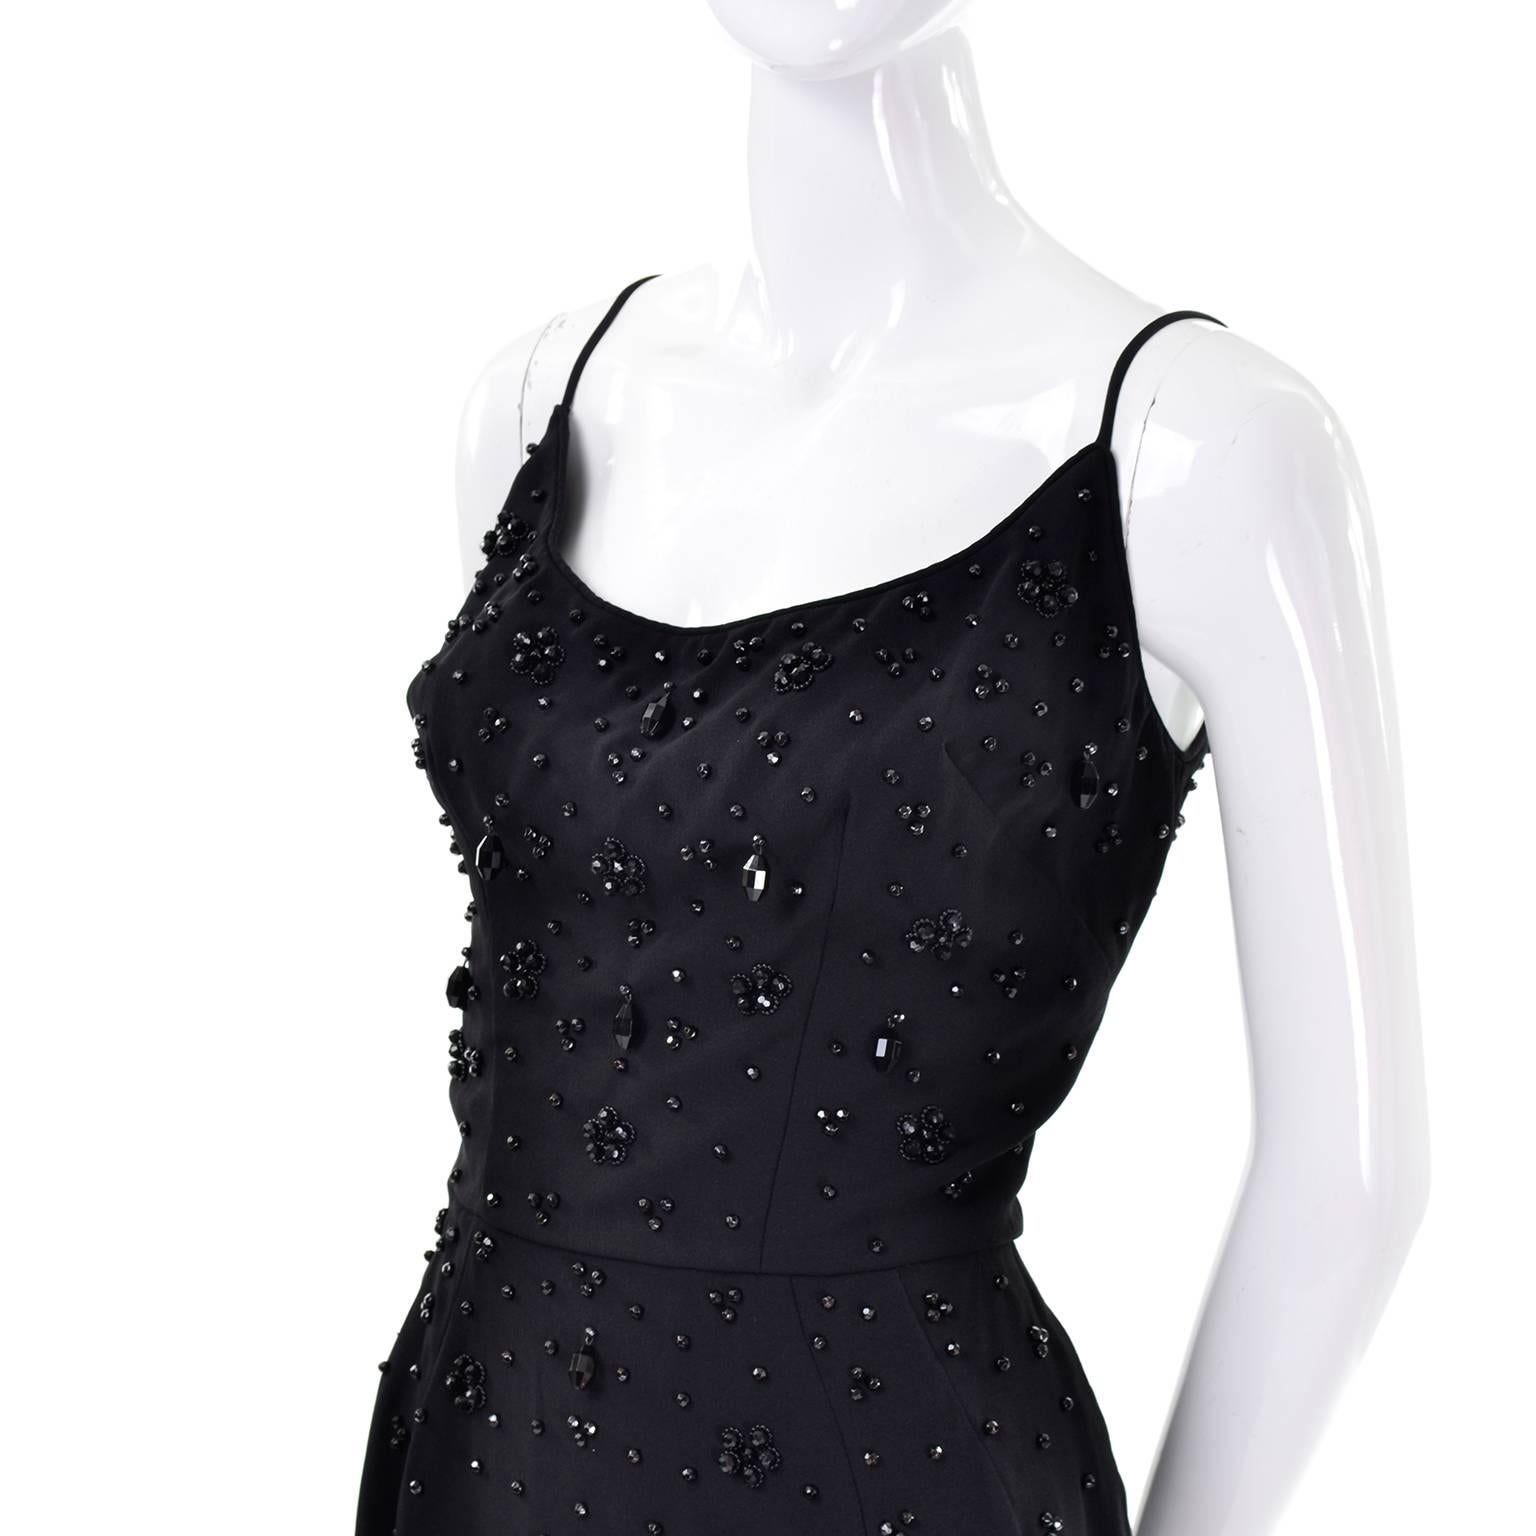 black dress with beads